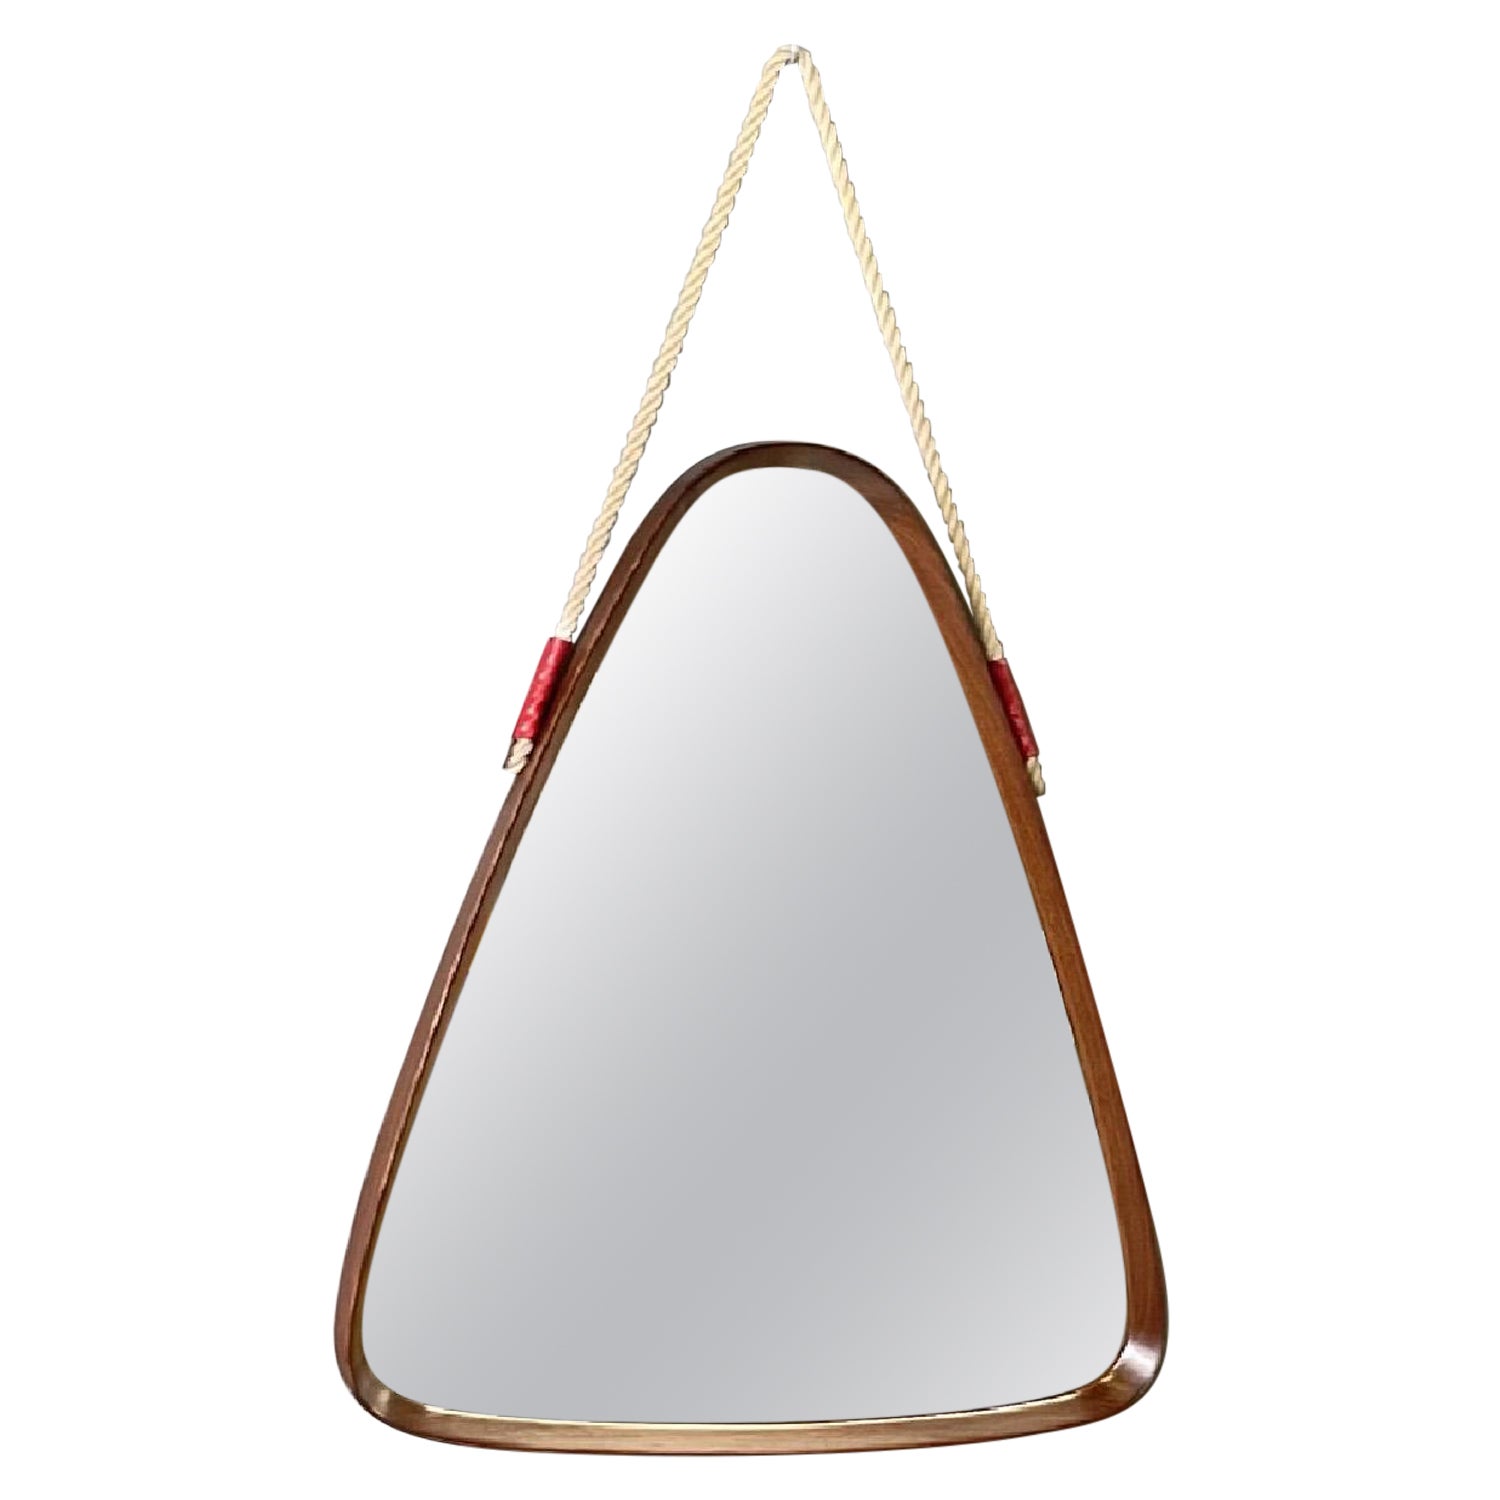 Italian mid-century modern solid wood triangular wall mirror with cord, 1960s